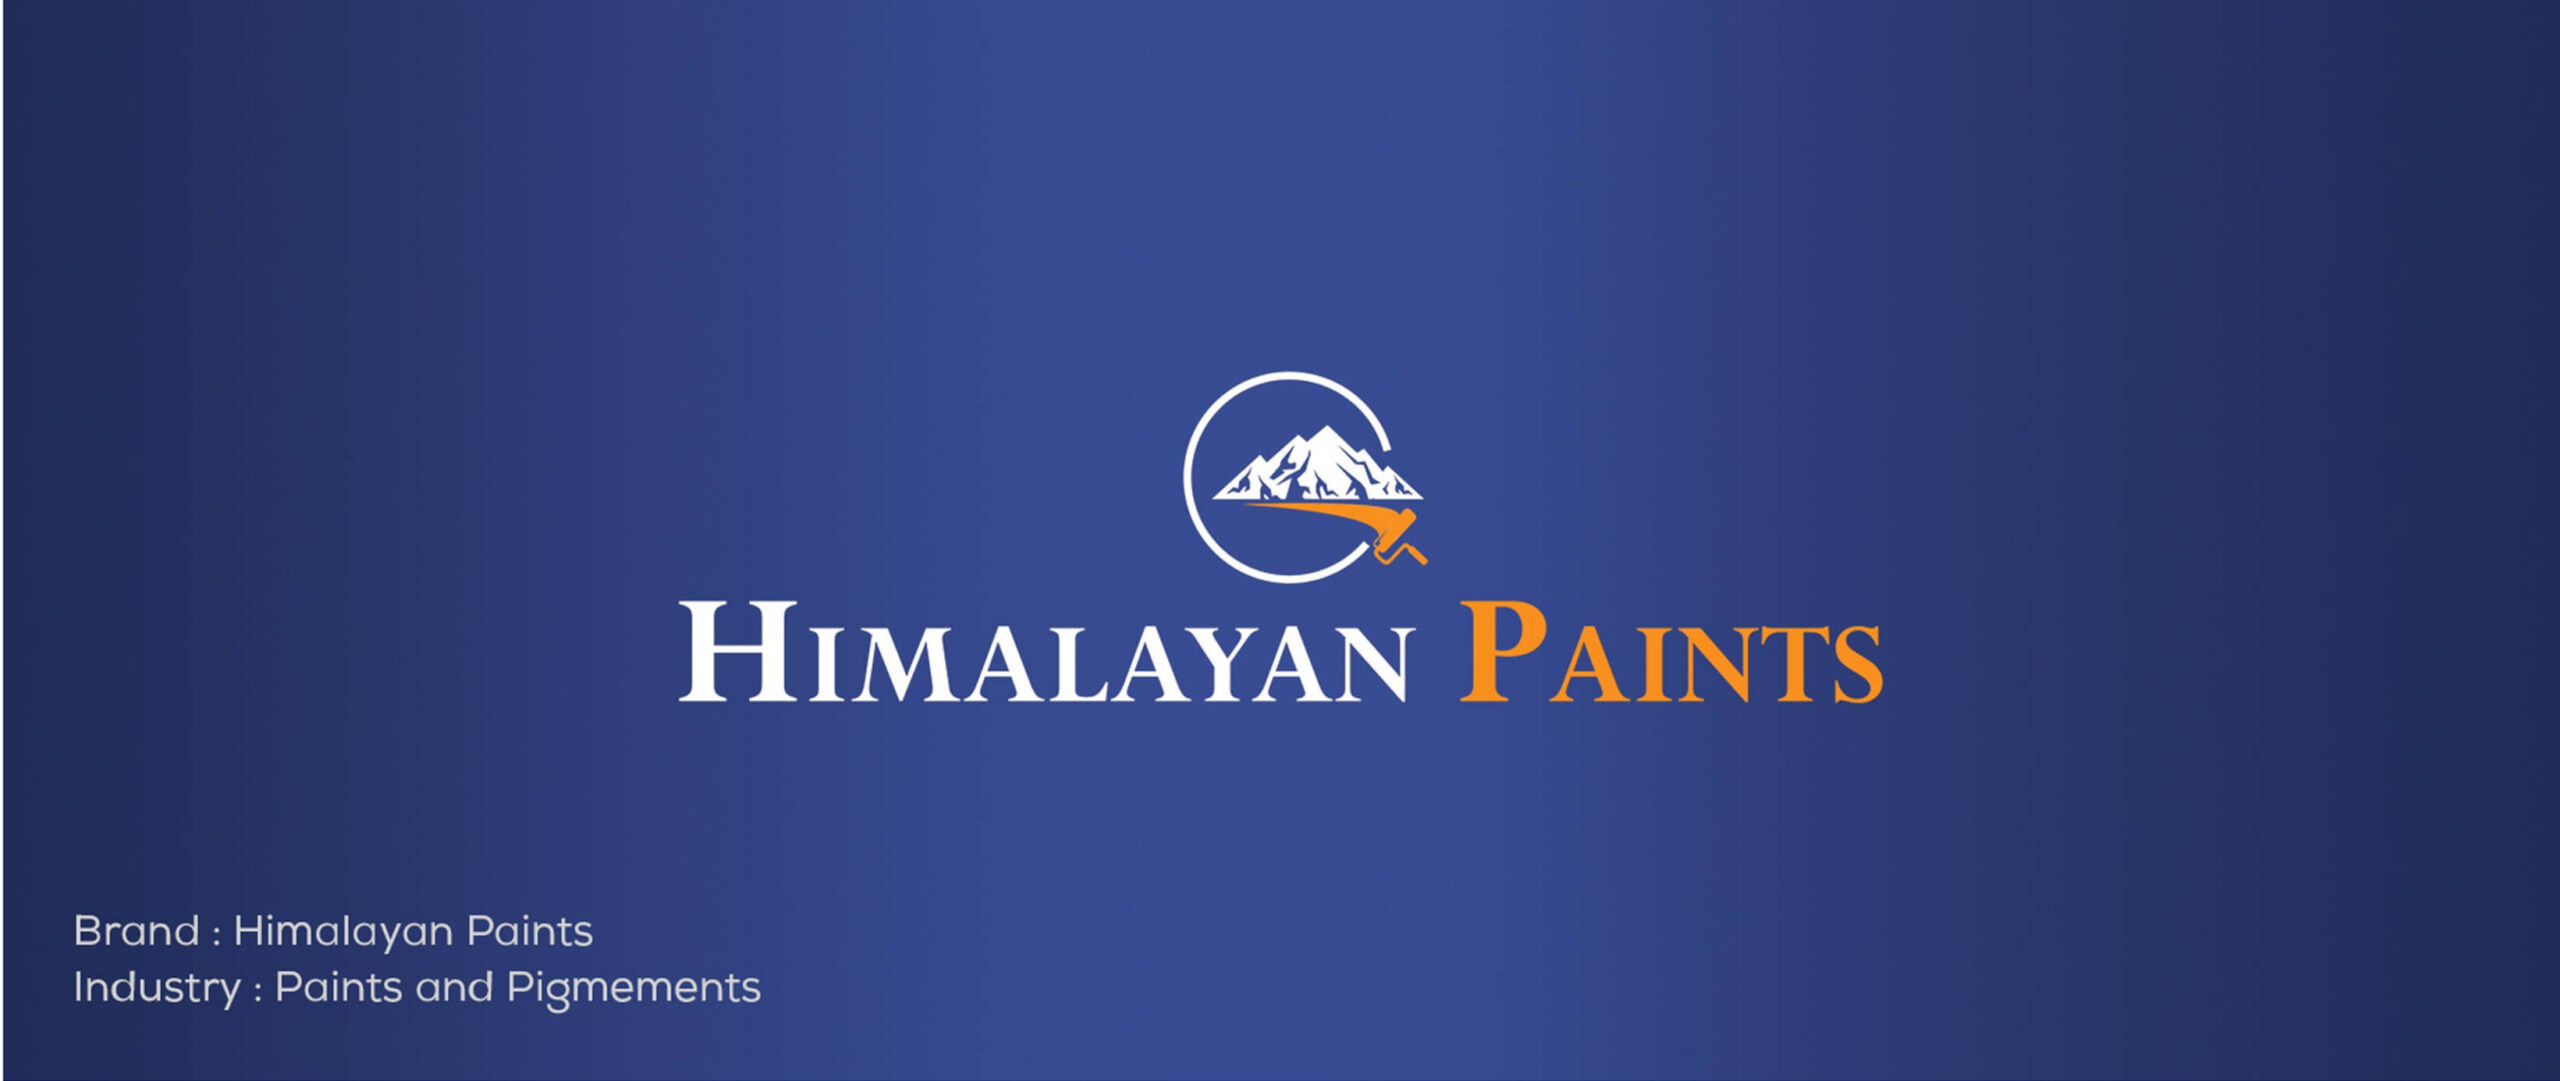 himalayan-paints-banner